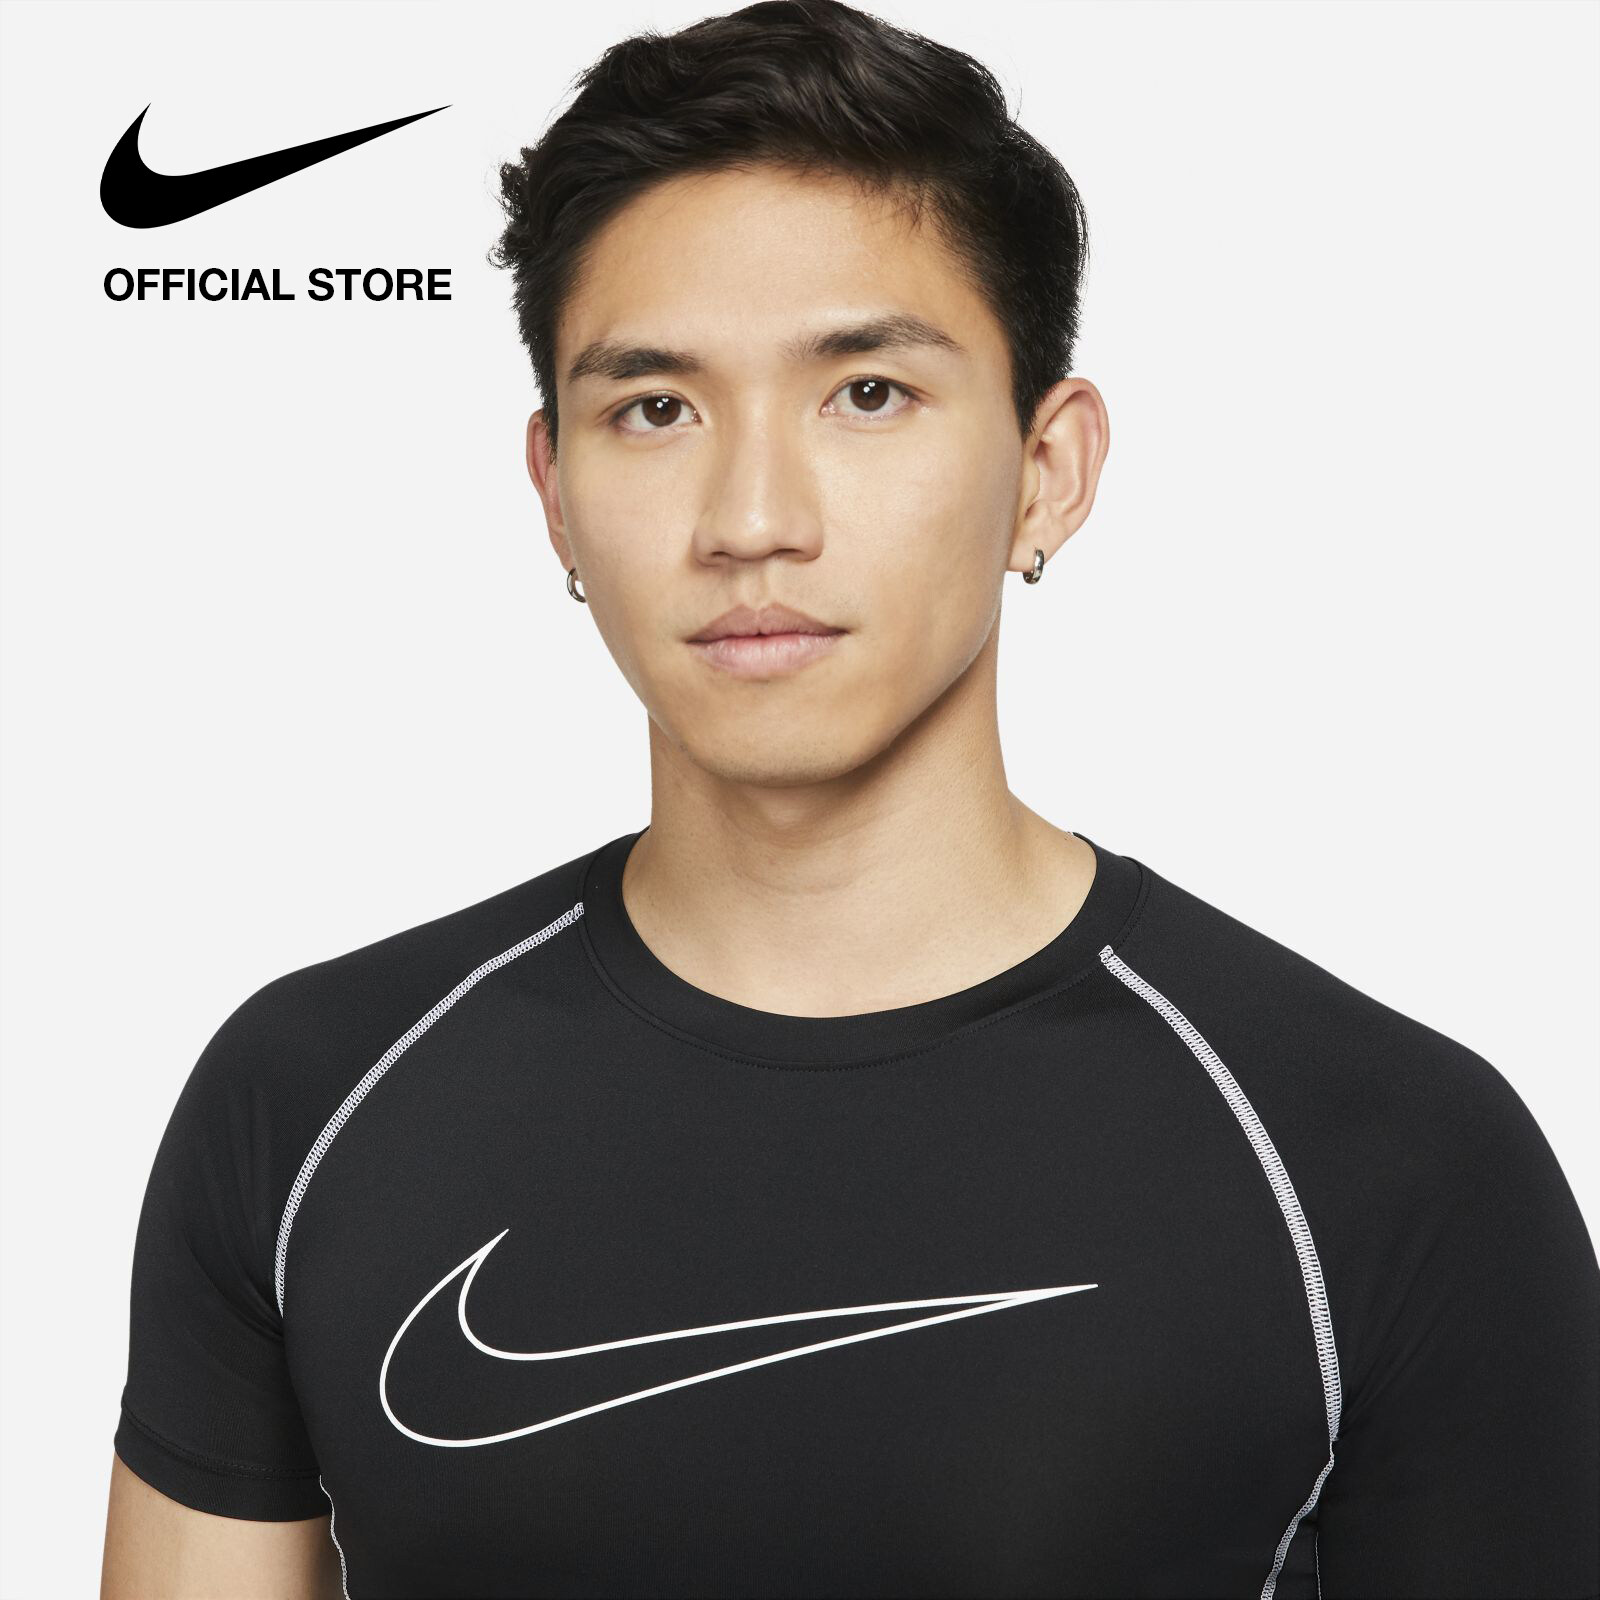 Nike Men's Pro Dri-FIT Tight Fit Short-Sleeve Top - Black เสื้อแขนสั้นผู้ชายทรงรัดรูป Nike Pro Dri-FIT - สีดำ